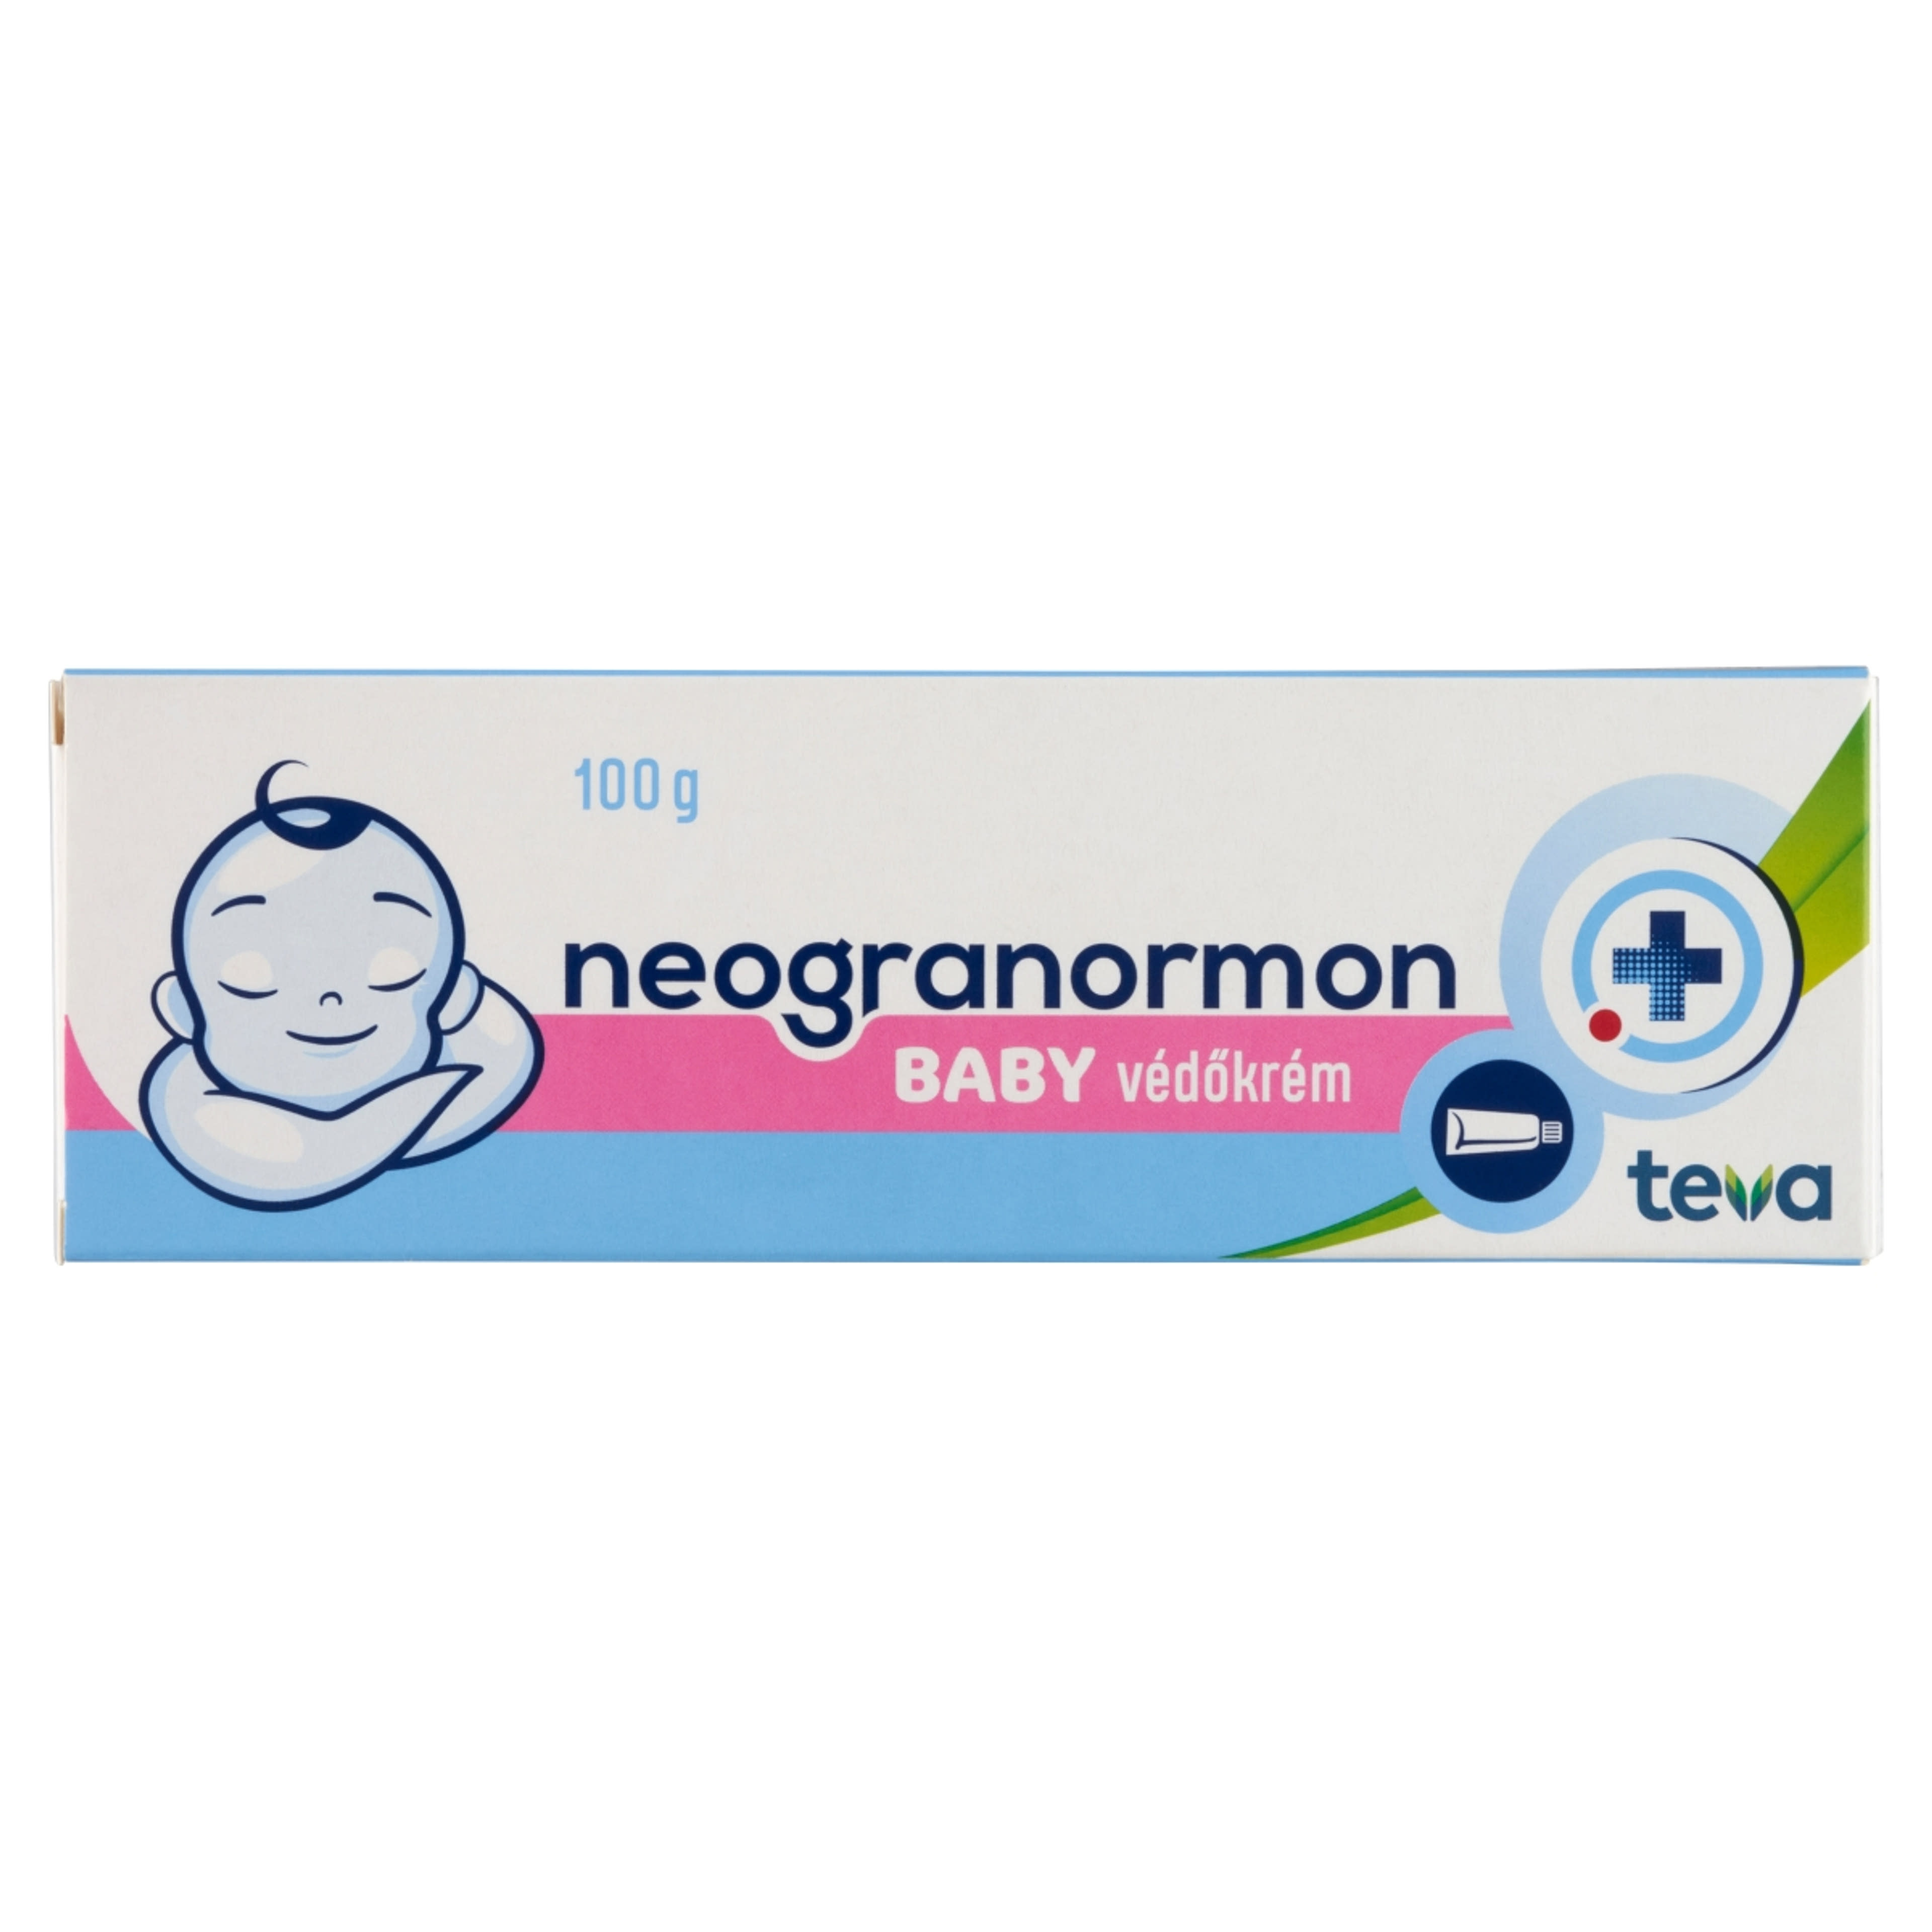 Neogranormon Baby védőkrém - 100 g